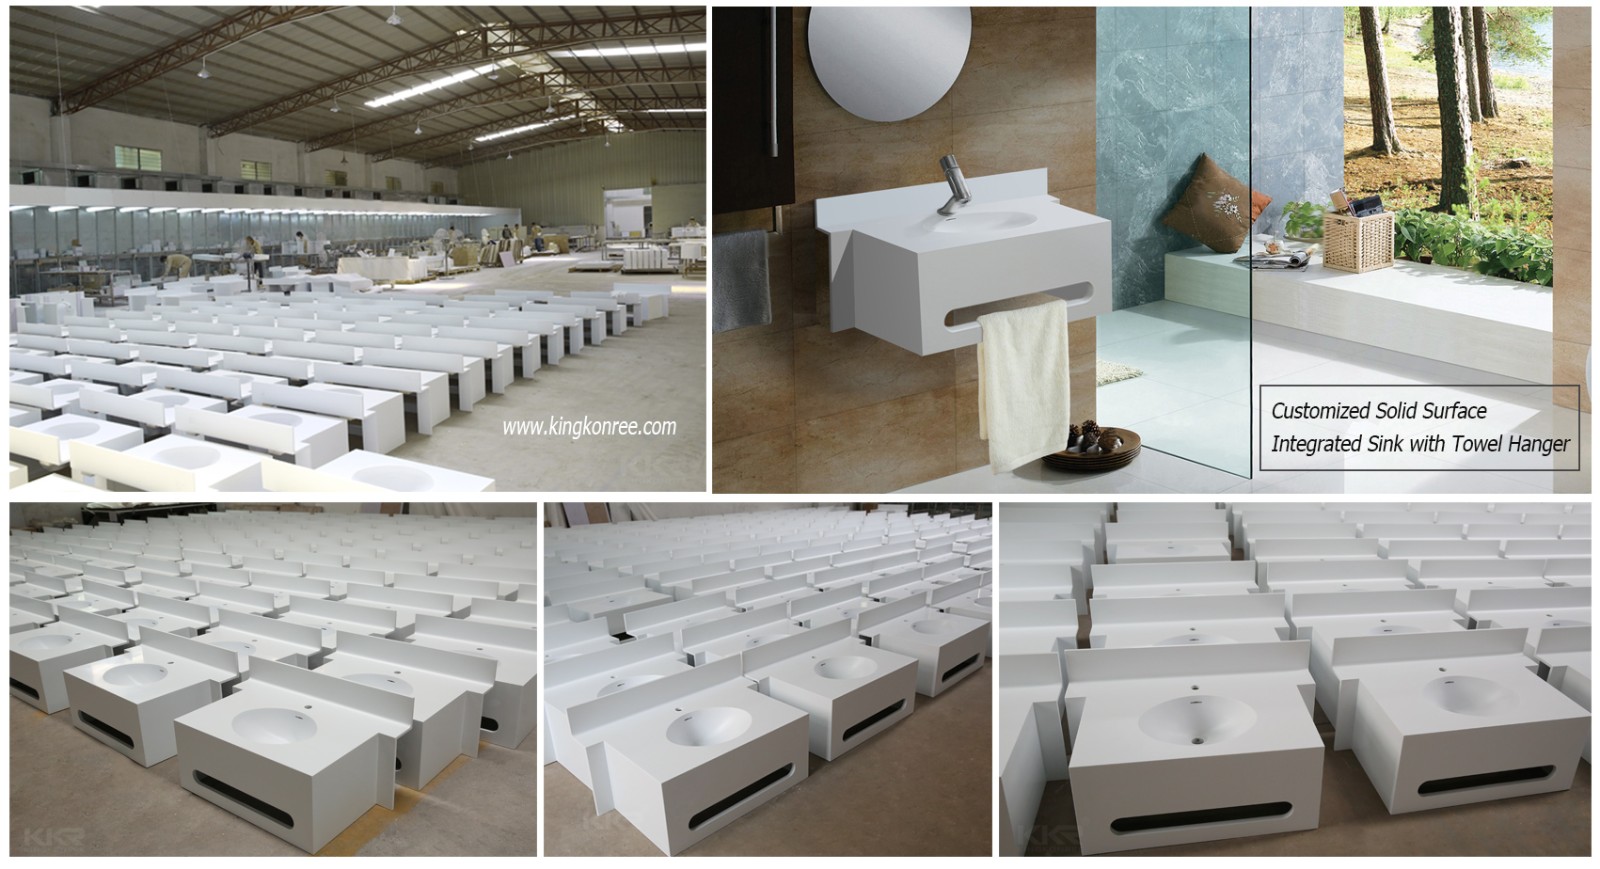 KingKonree solid surface bathroom countertops factory for home-1